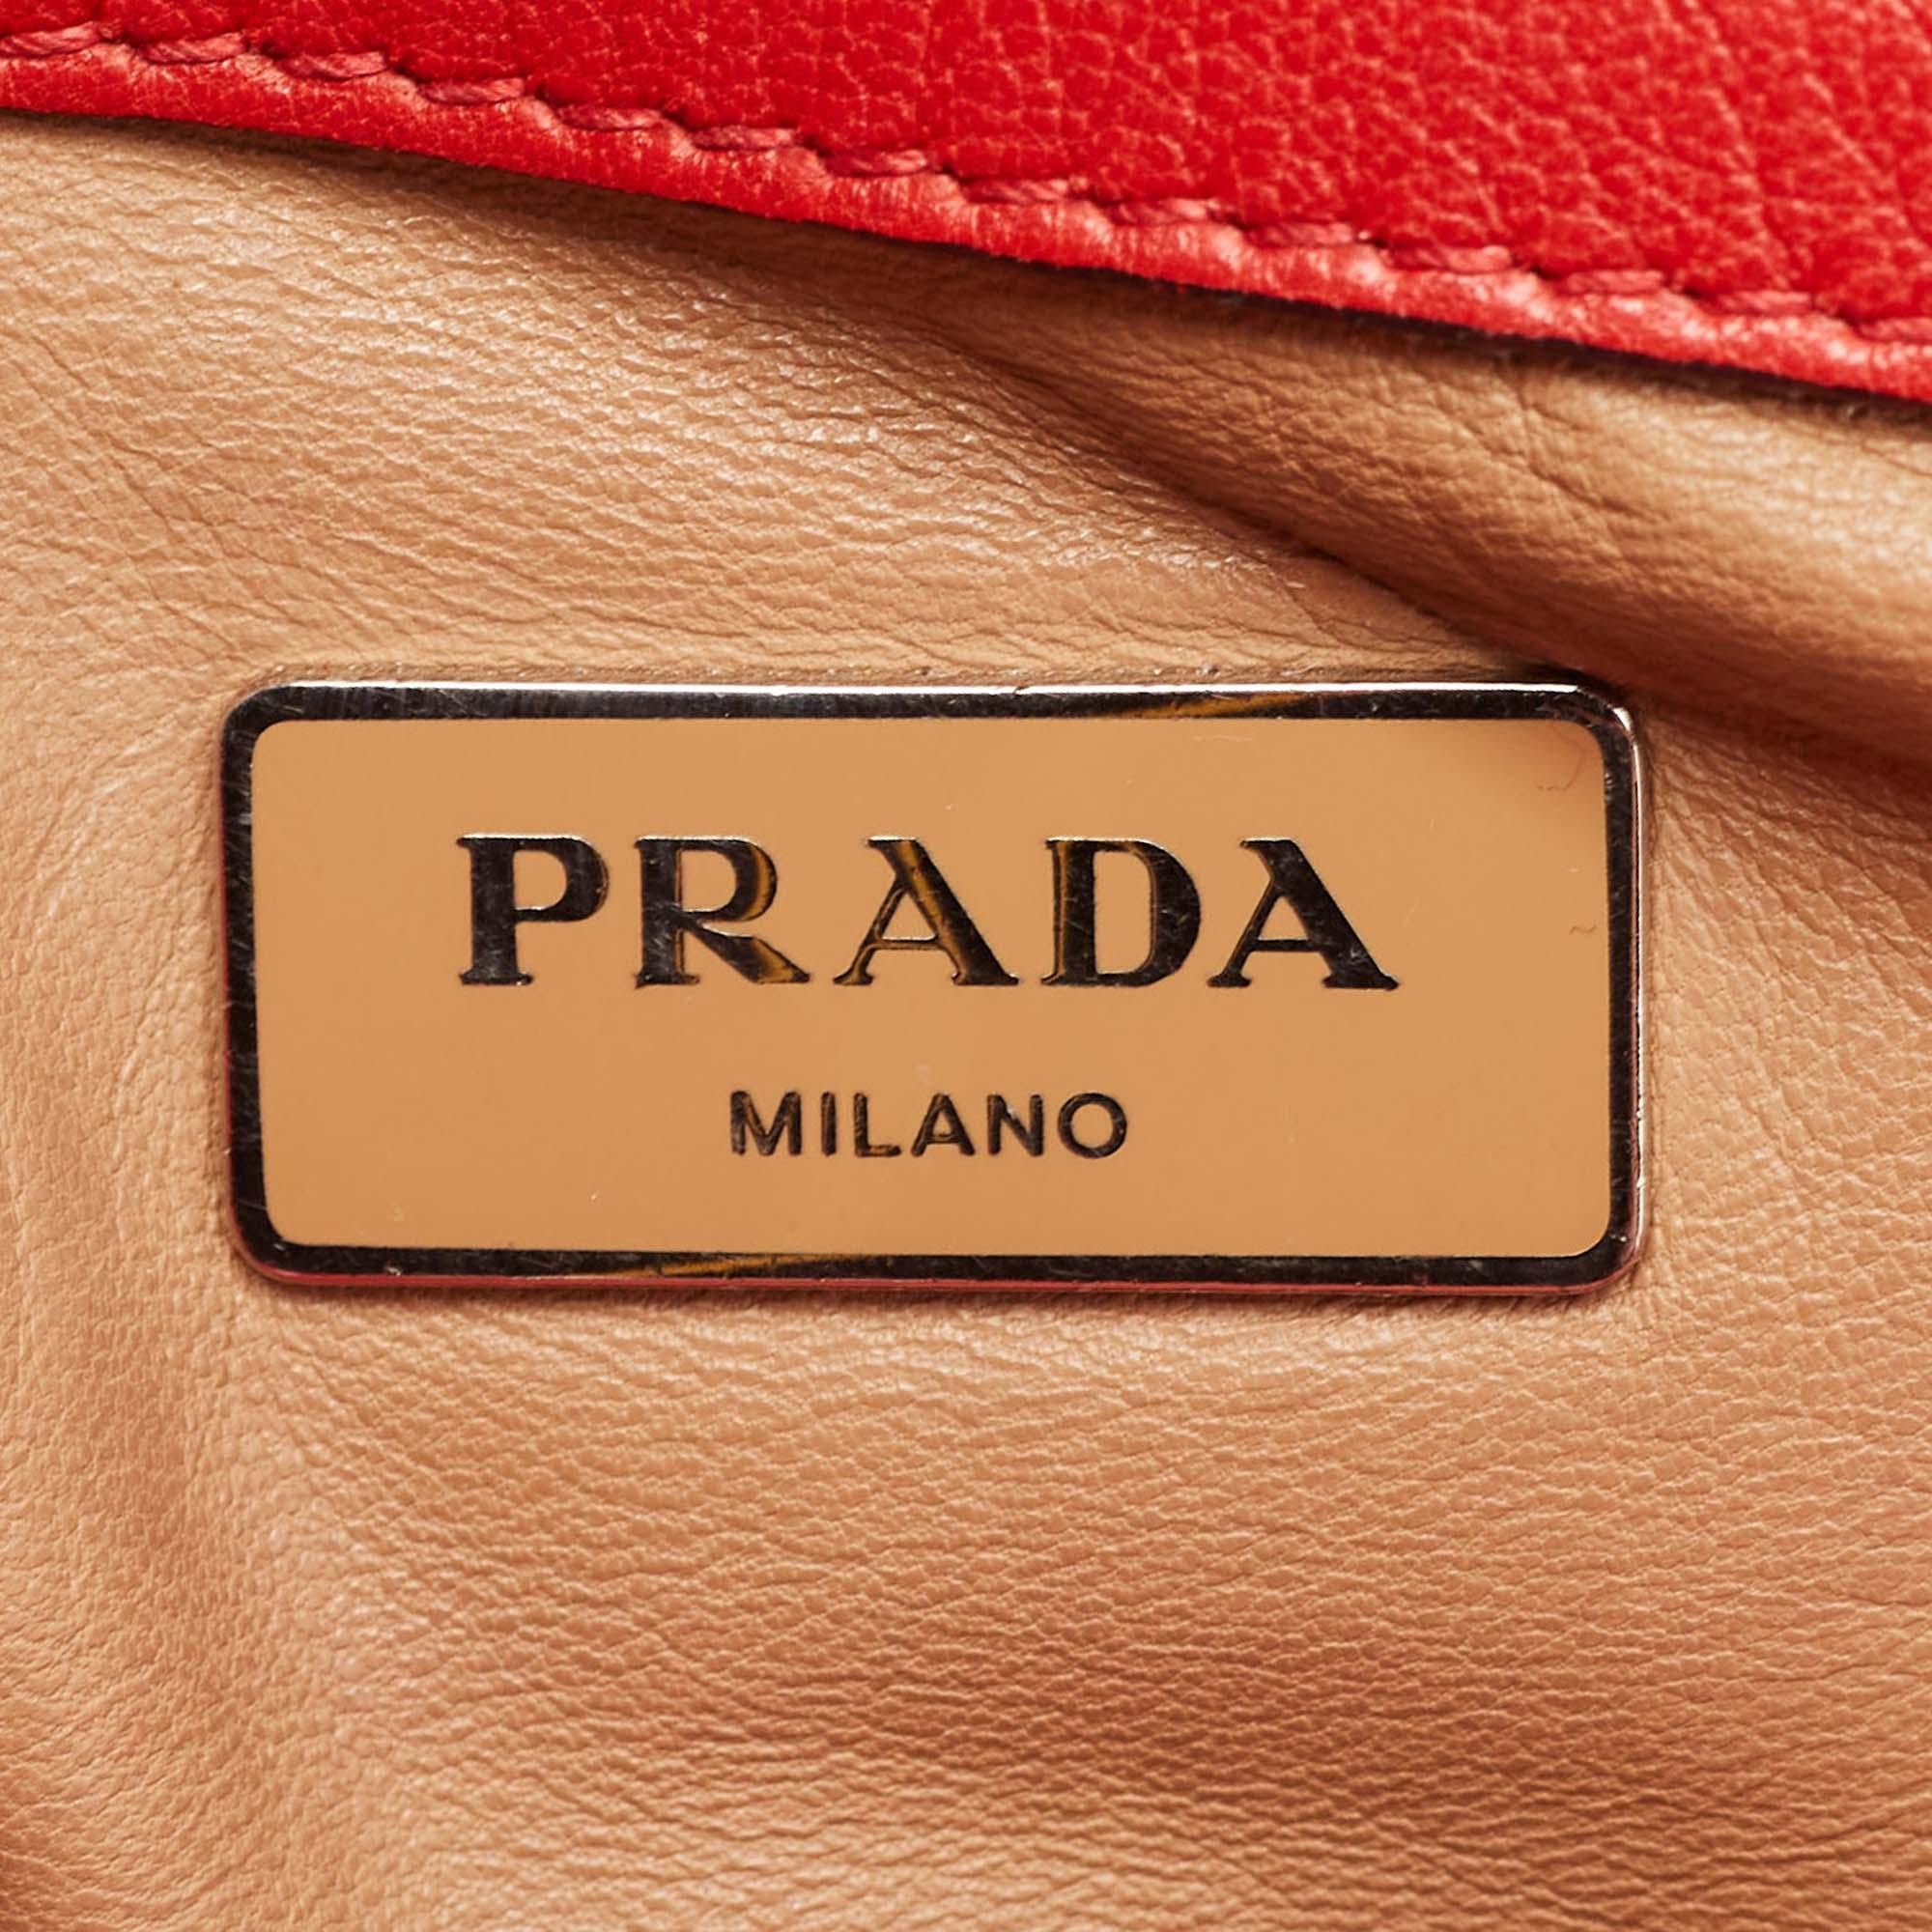 Prada Red Leather Shopper Tote For Sale 4